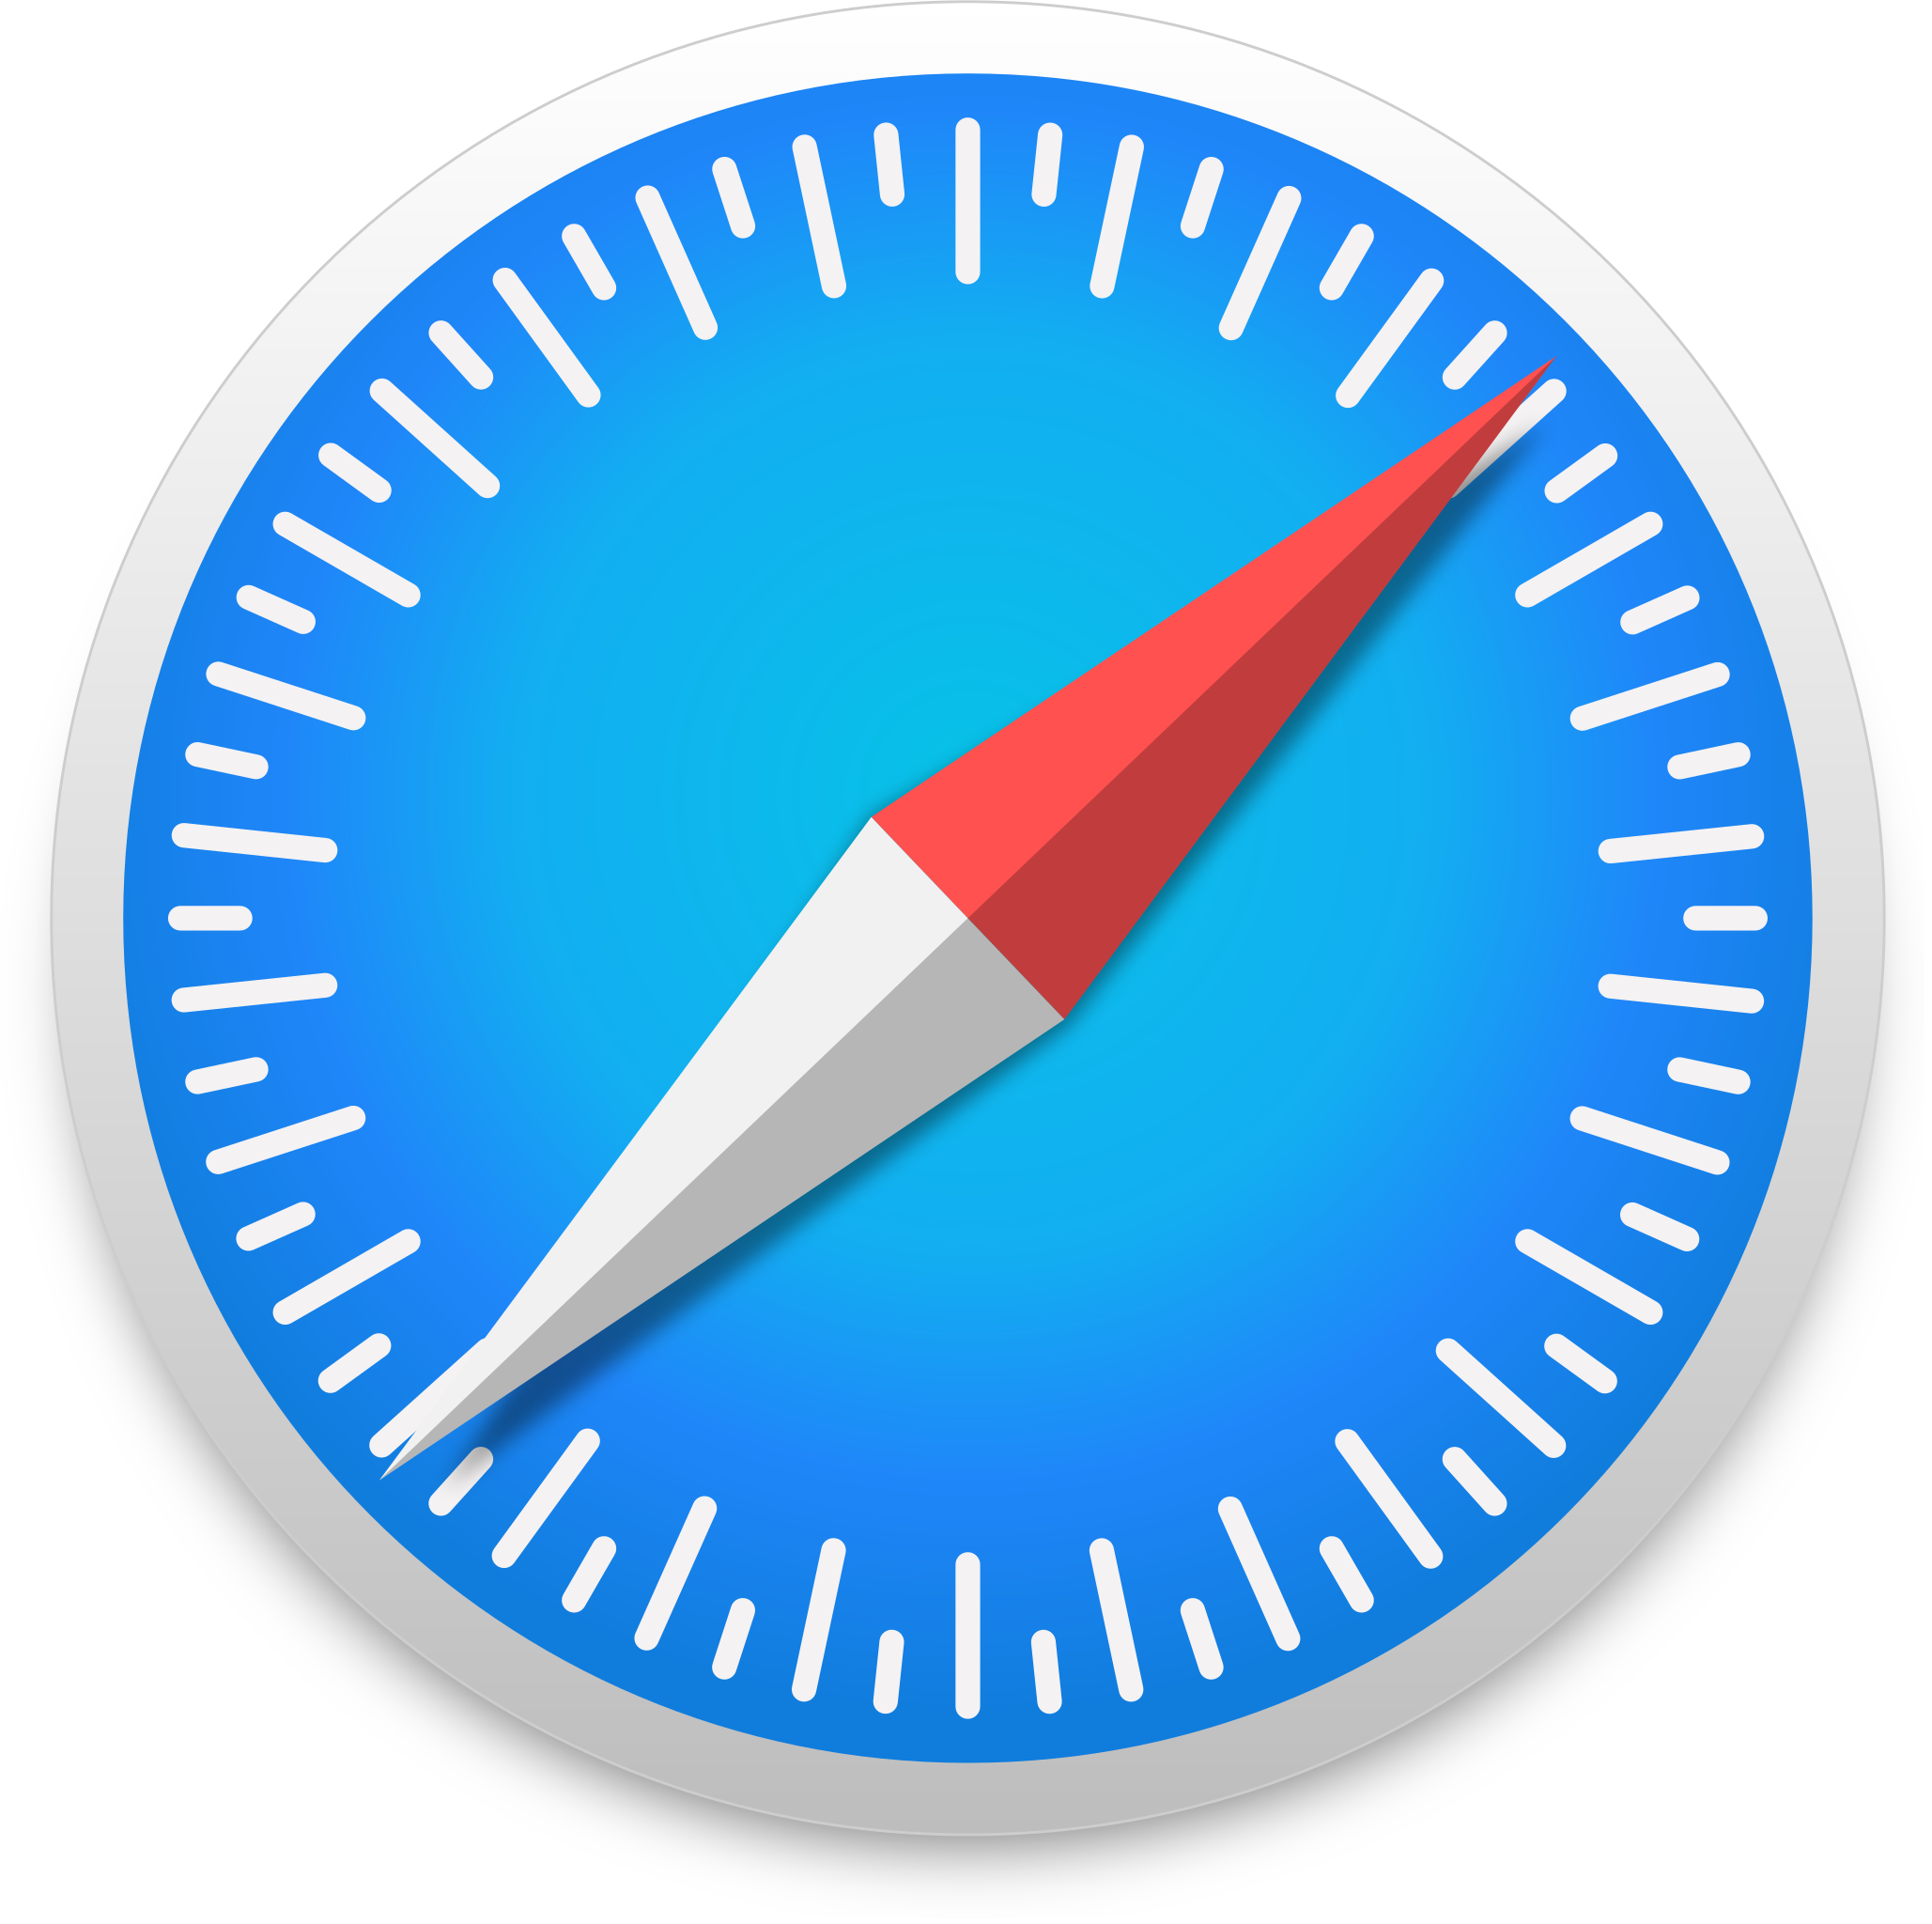 File:Safari browser logo.svg - Wikimedia Commons